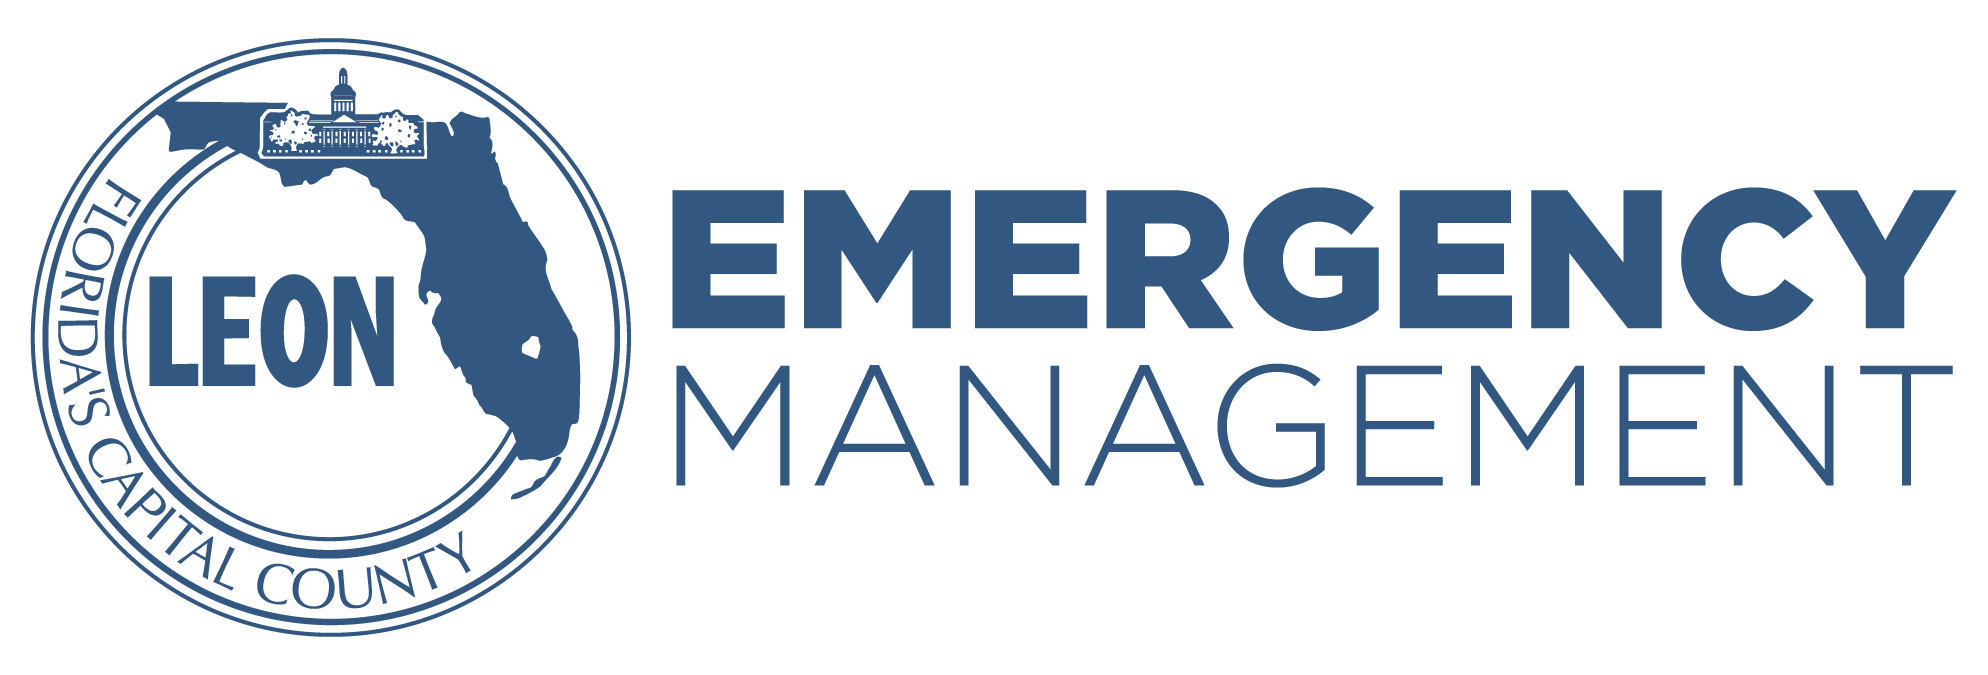 Blue Leon County Emergency Management logo